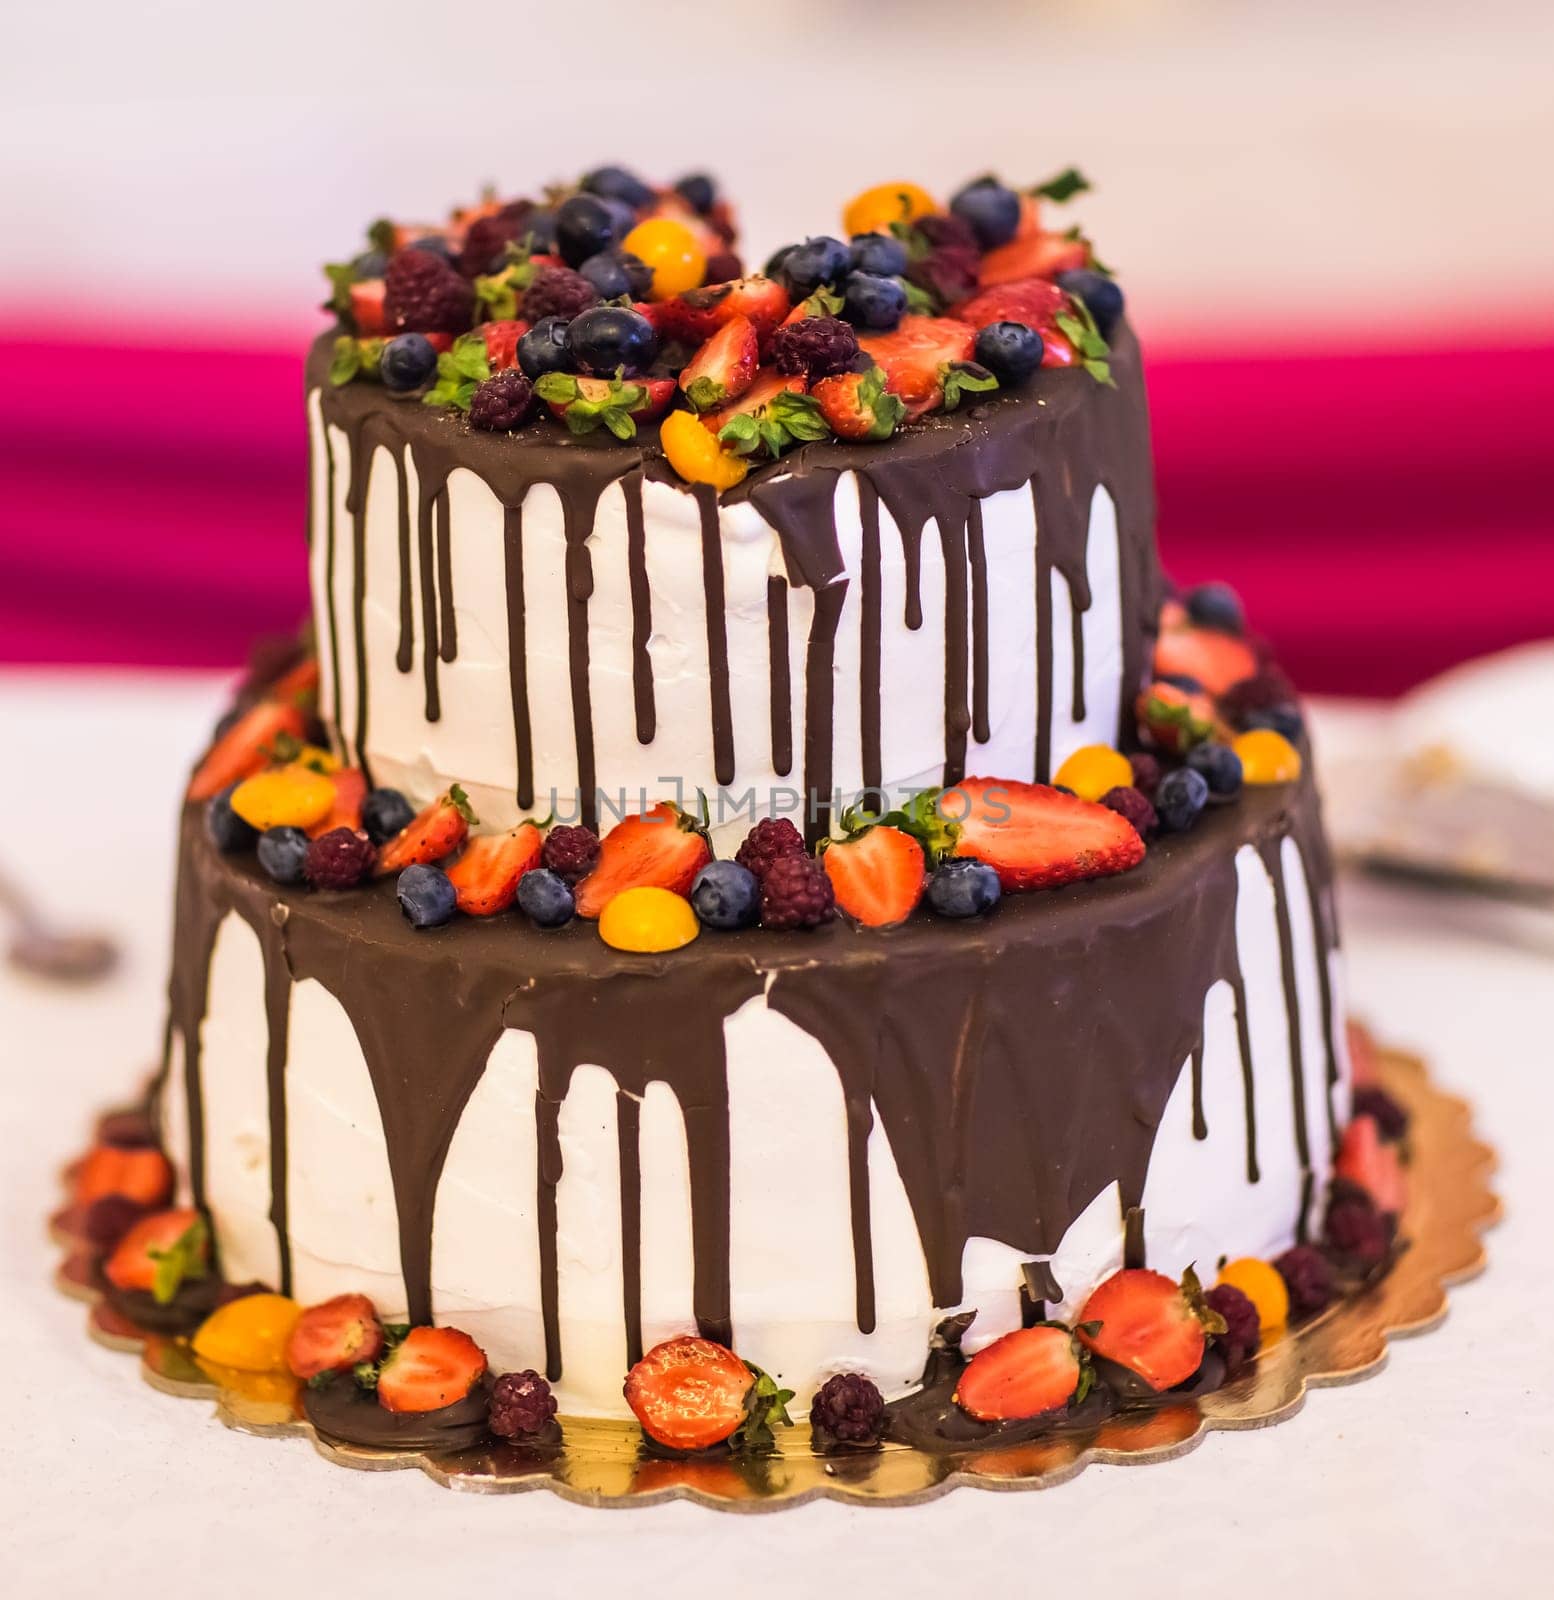 Chocolate Tasty Wedding Cake at Wedding reception